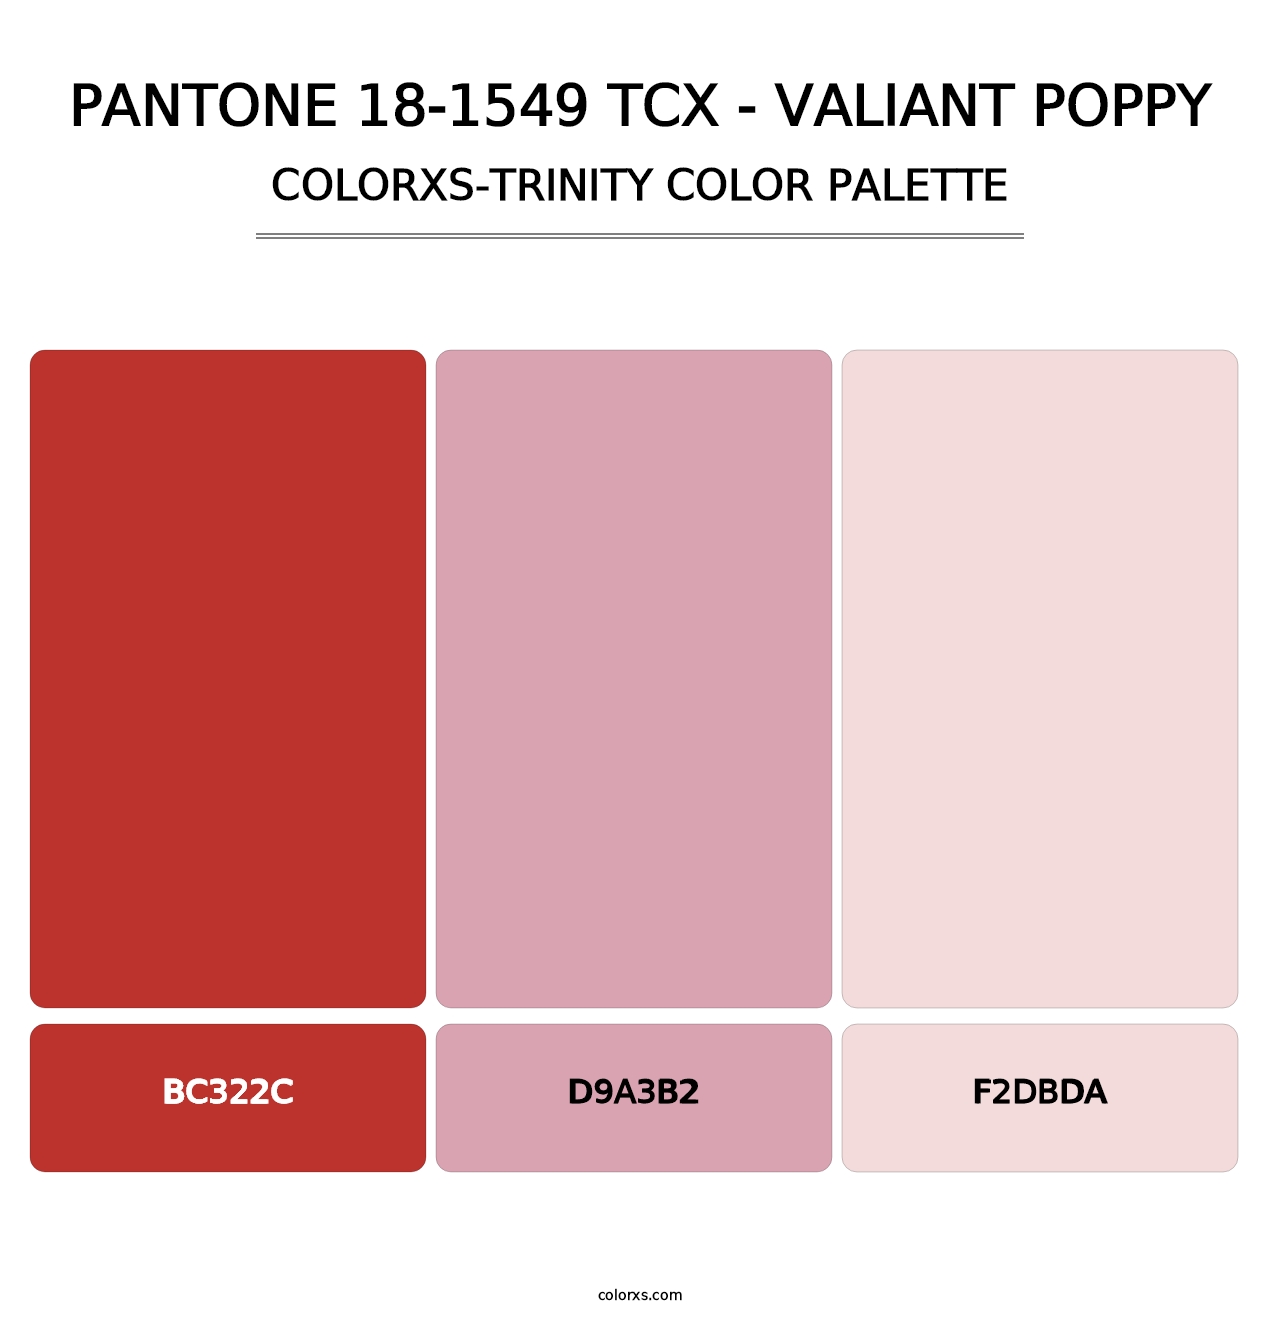 PANTONE 18-1549 TCX - Valiant Poppy - Colorxs Trinity Palette